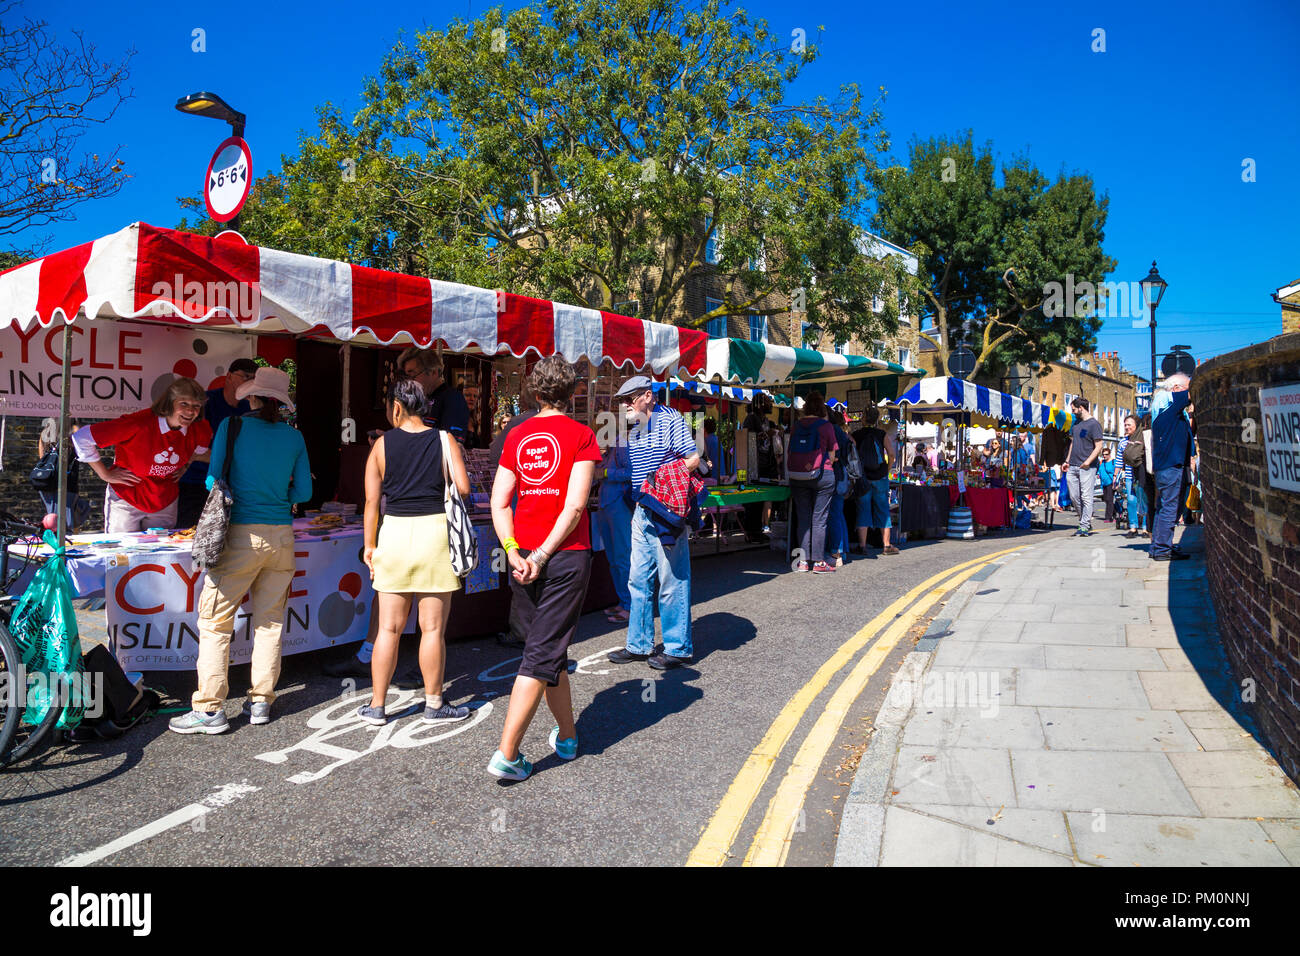 Market stalls along Danbury Street during Angel Canal Festival 2018, London. UK Stock Photo